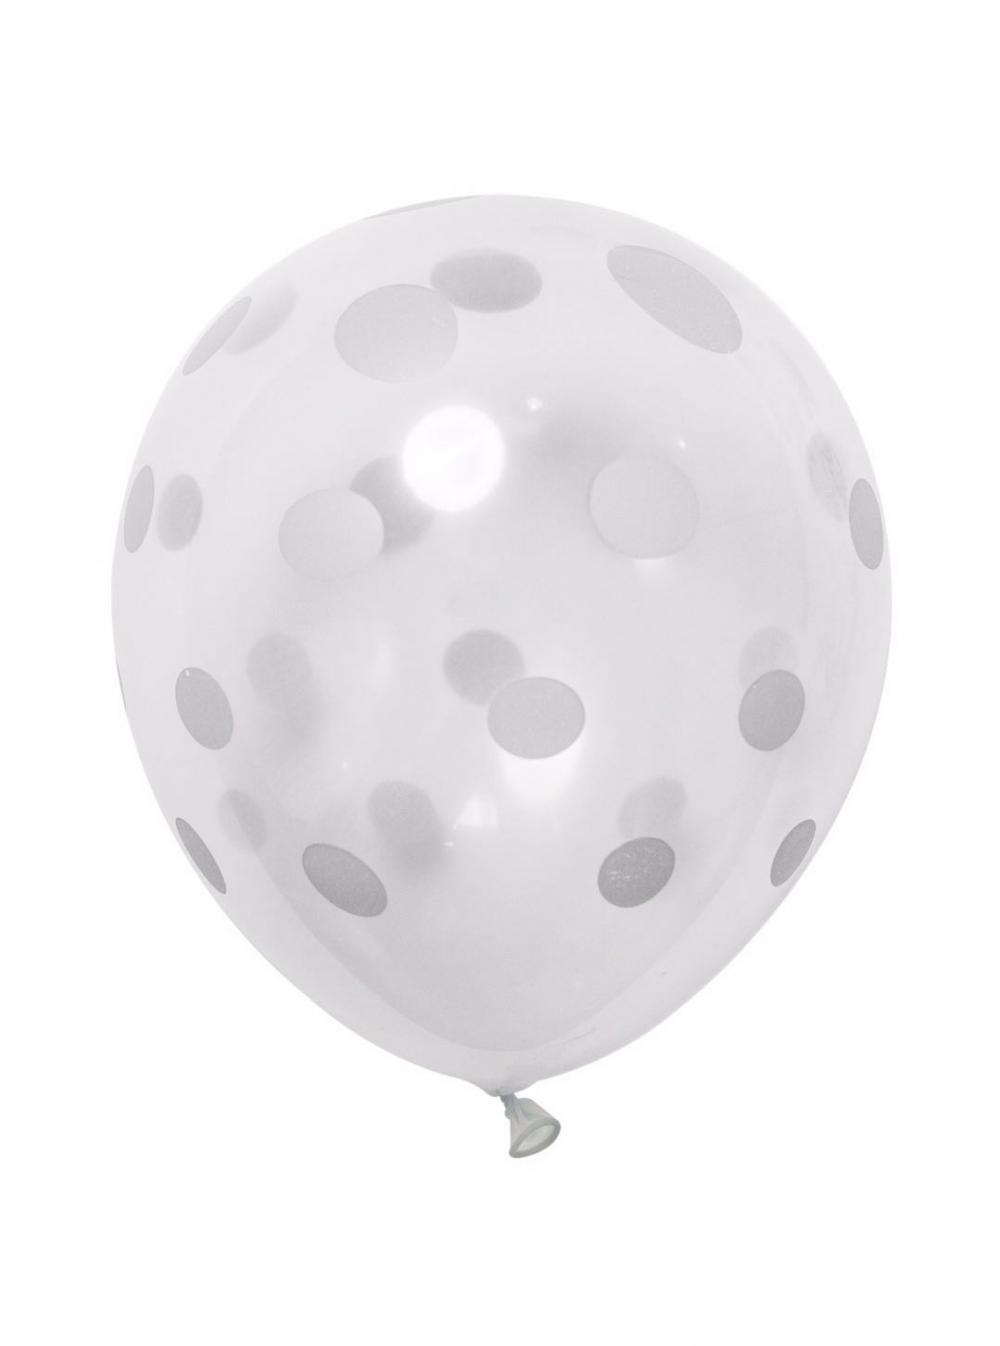 12 Inch Standard Polka Dot Balloons Clear Balloon White Dot (10PCS)